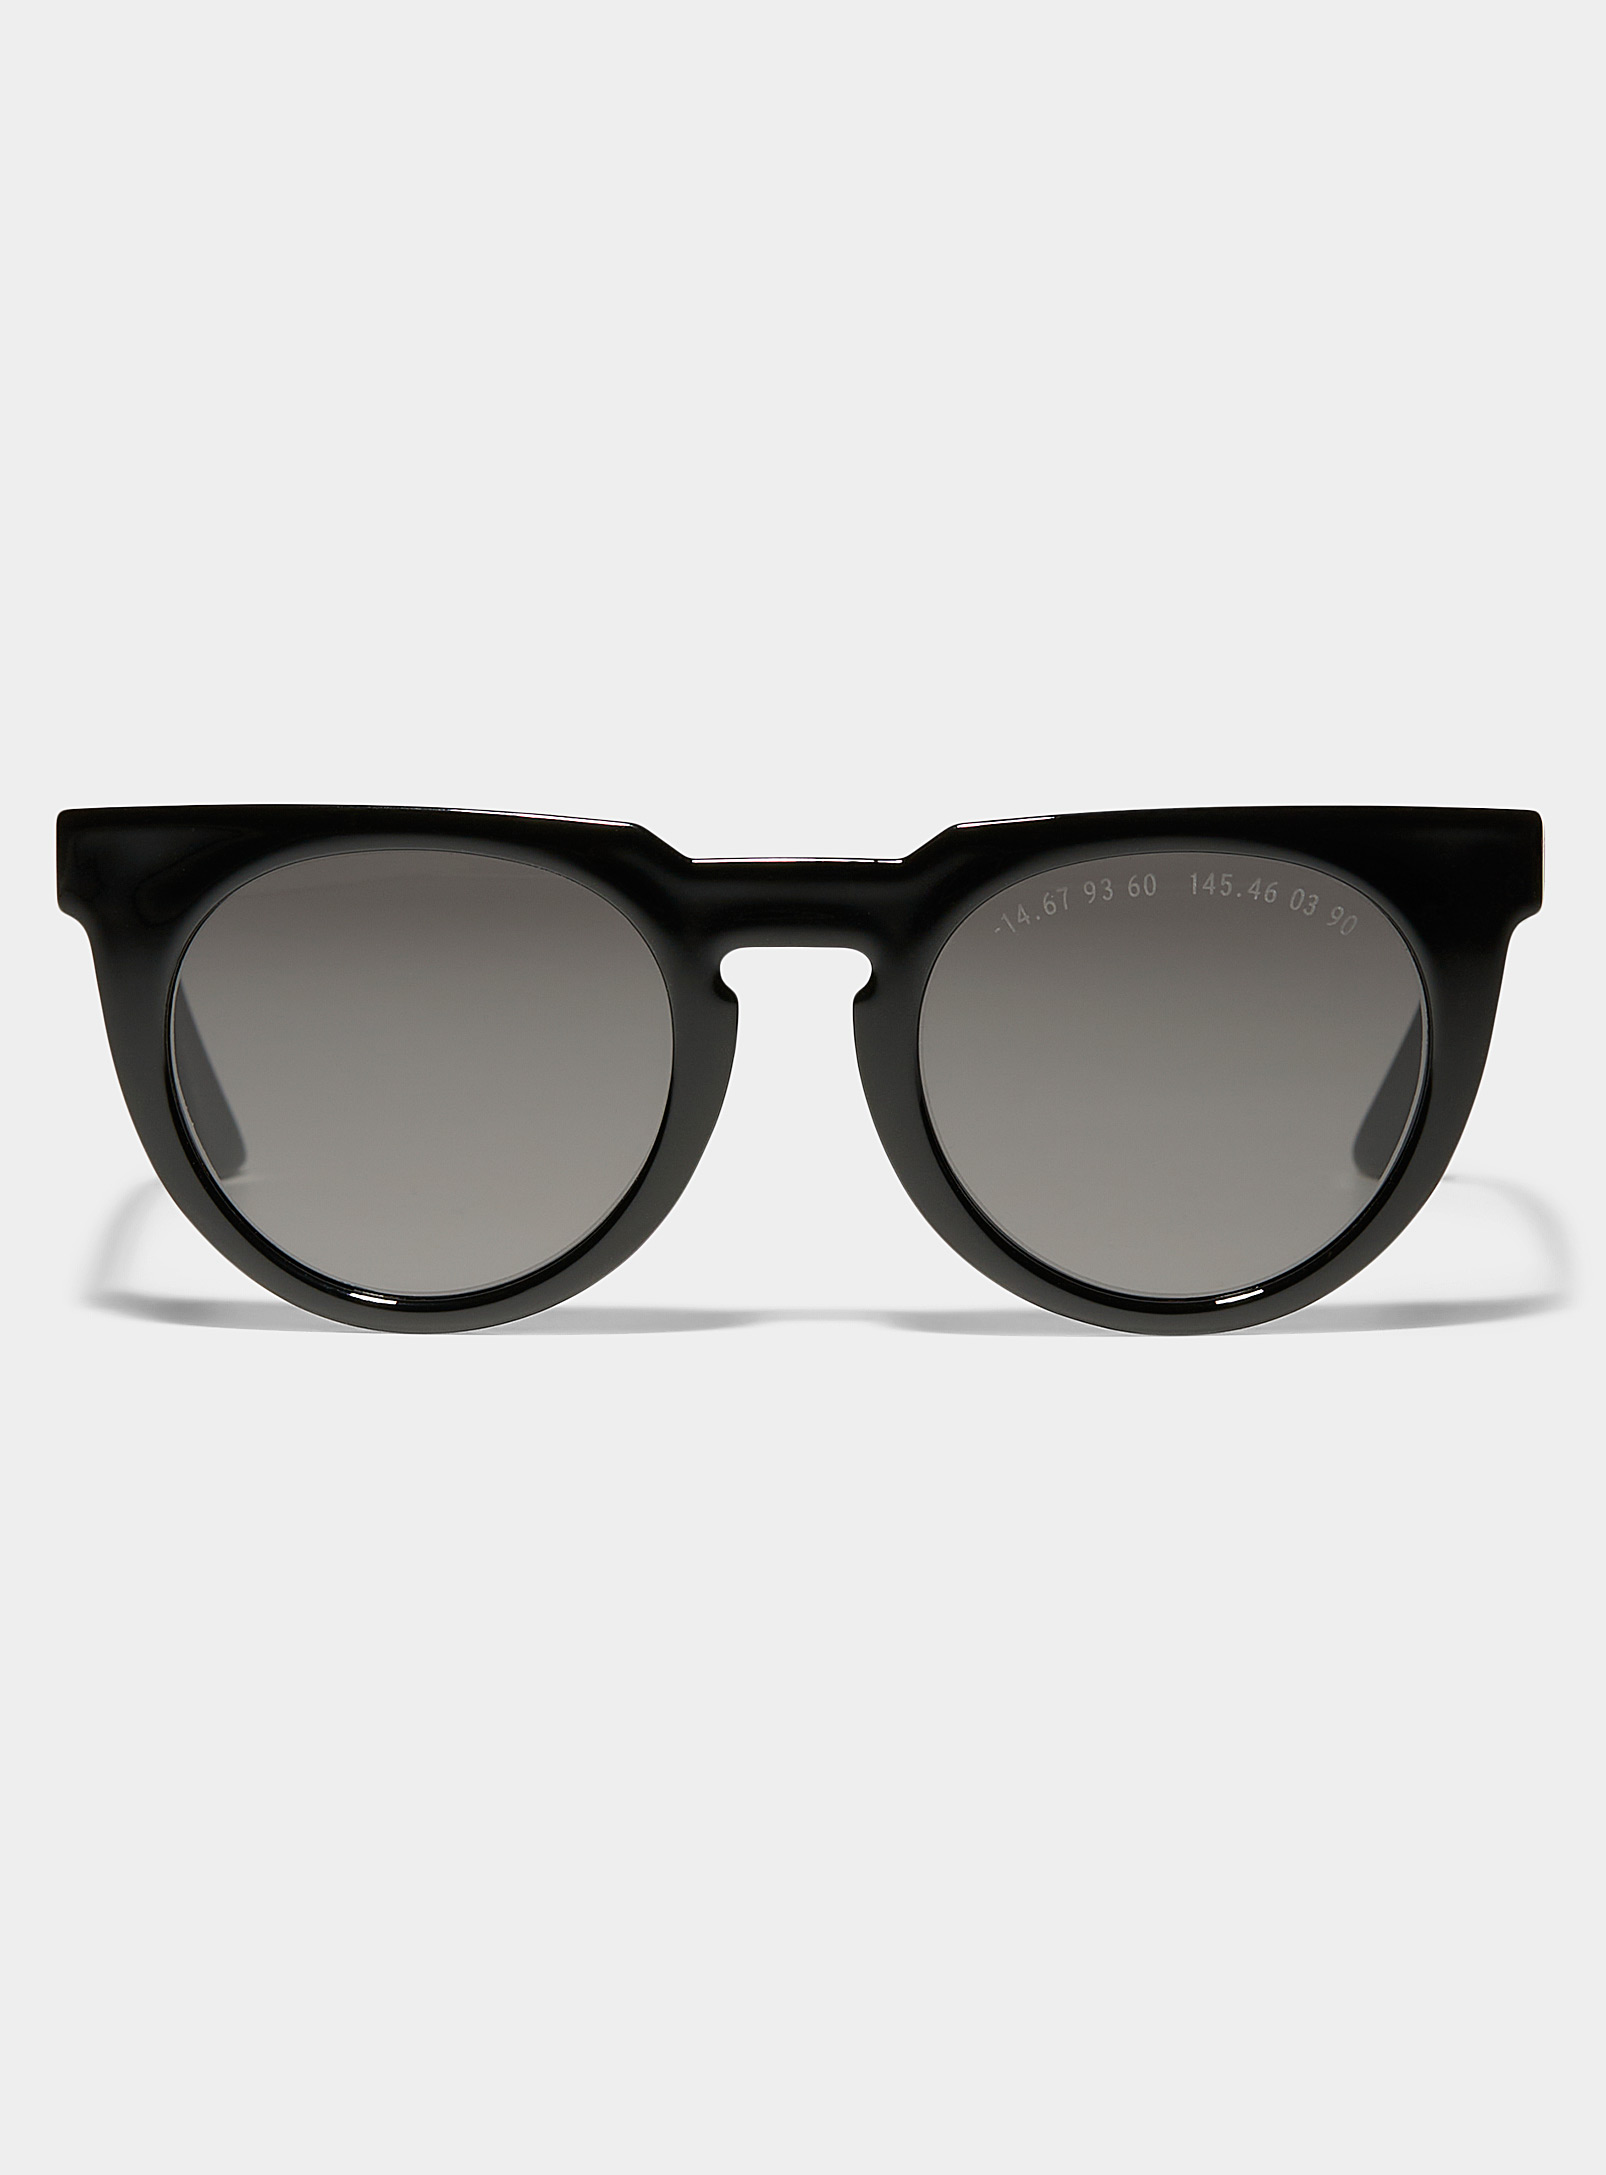 Clean Waves - Men's Type 05 round sunglasses